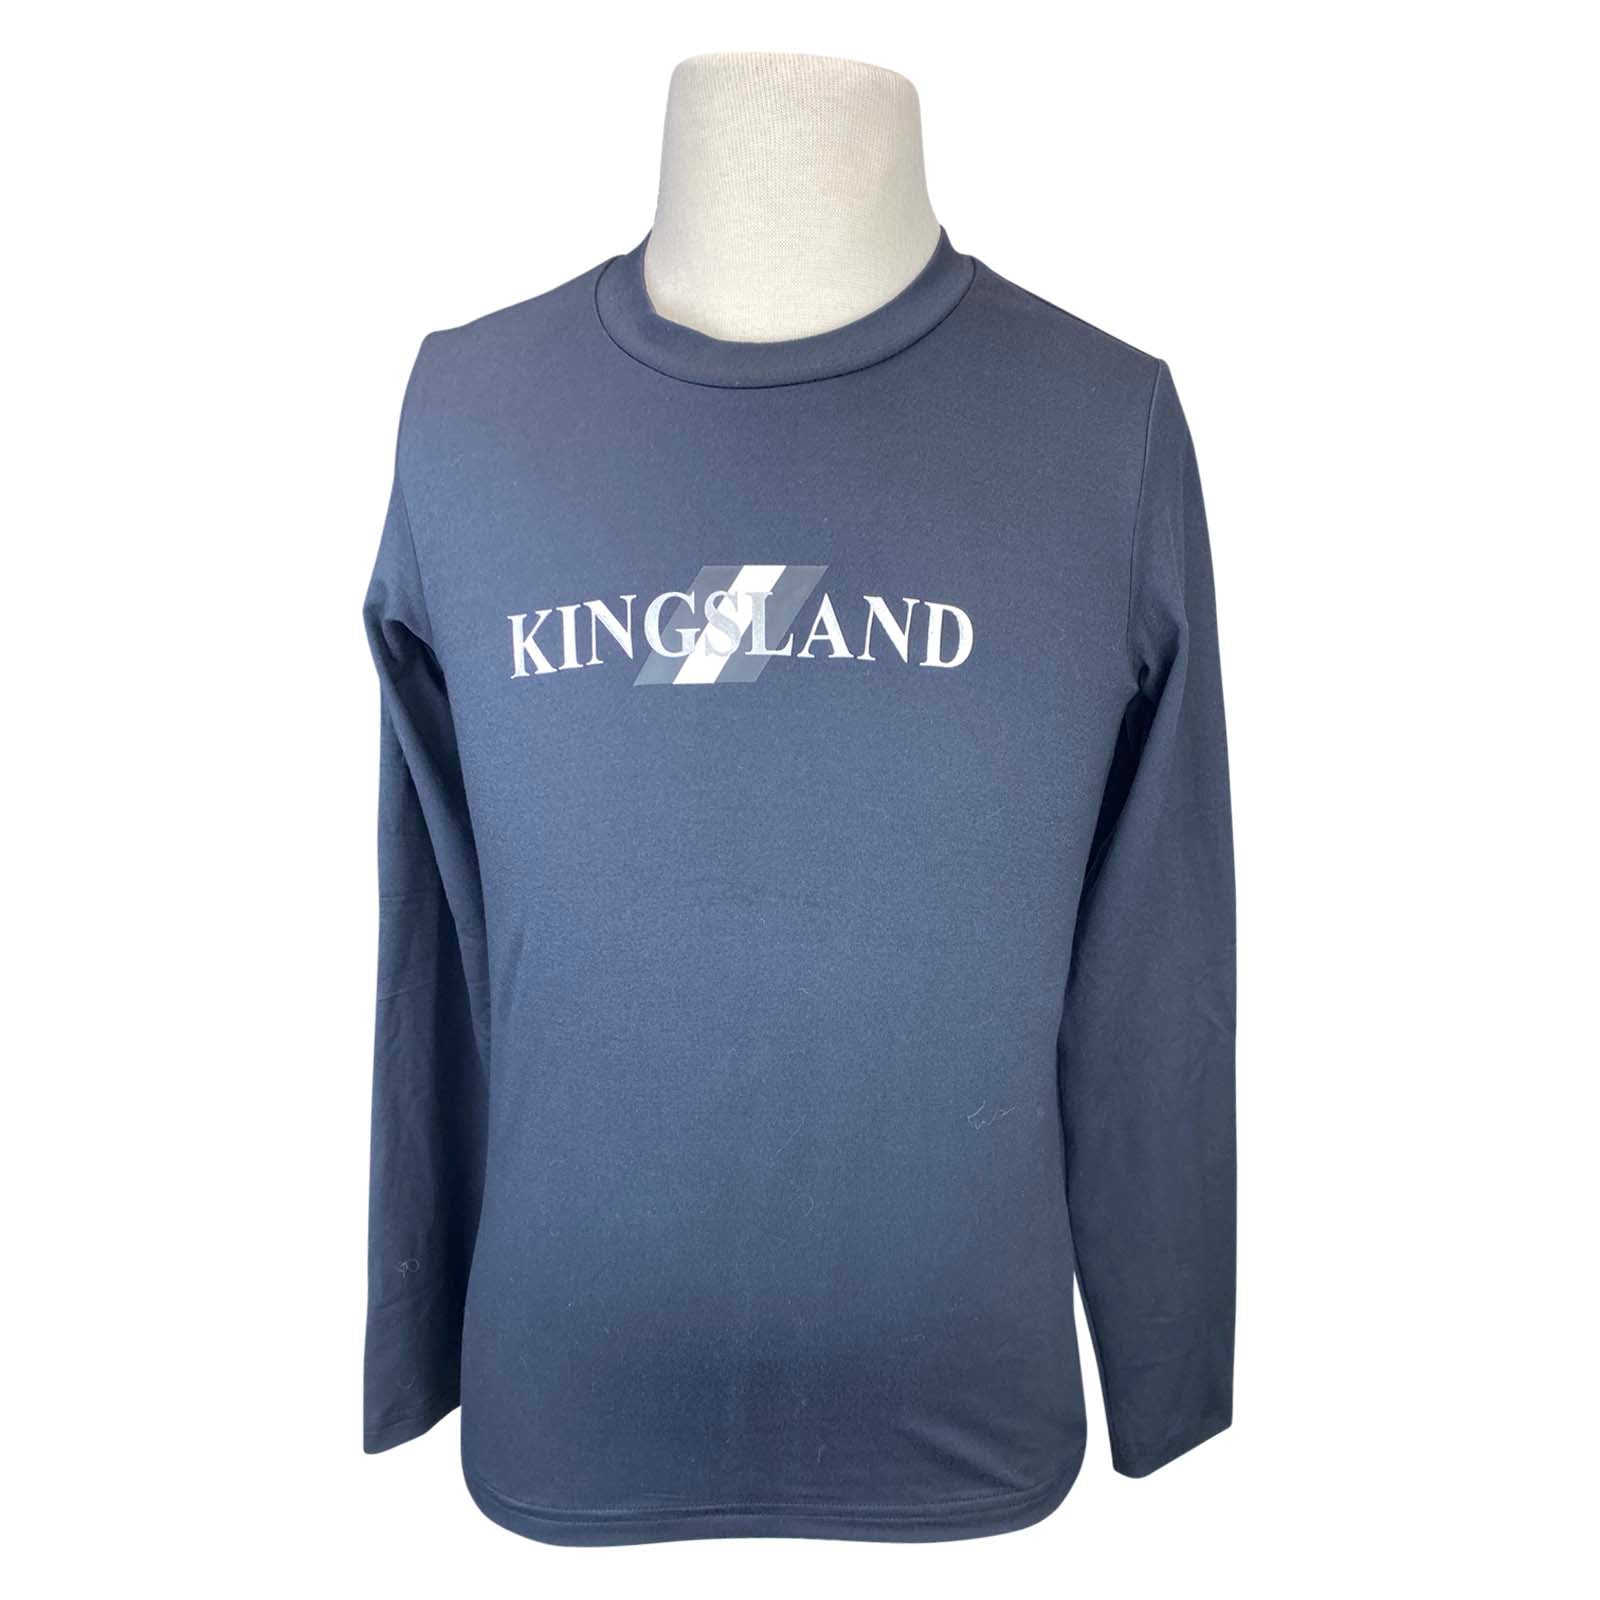 Kingsland 'Melia' Training Shirt in Navy